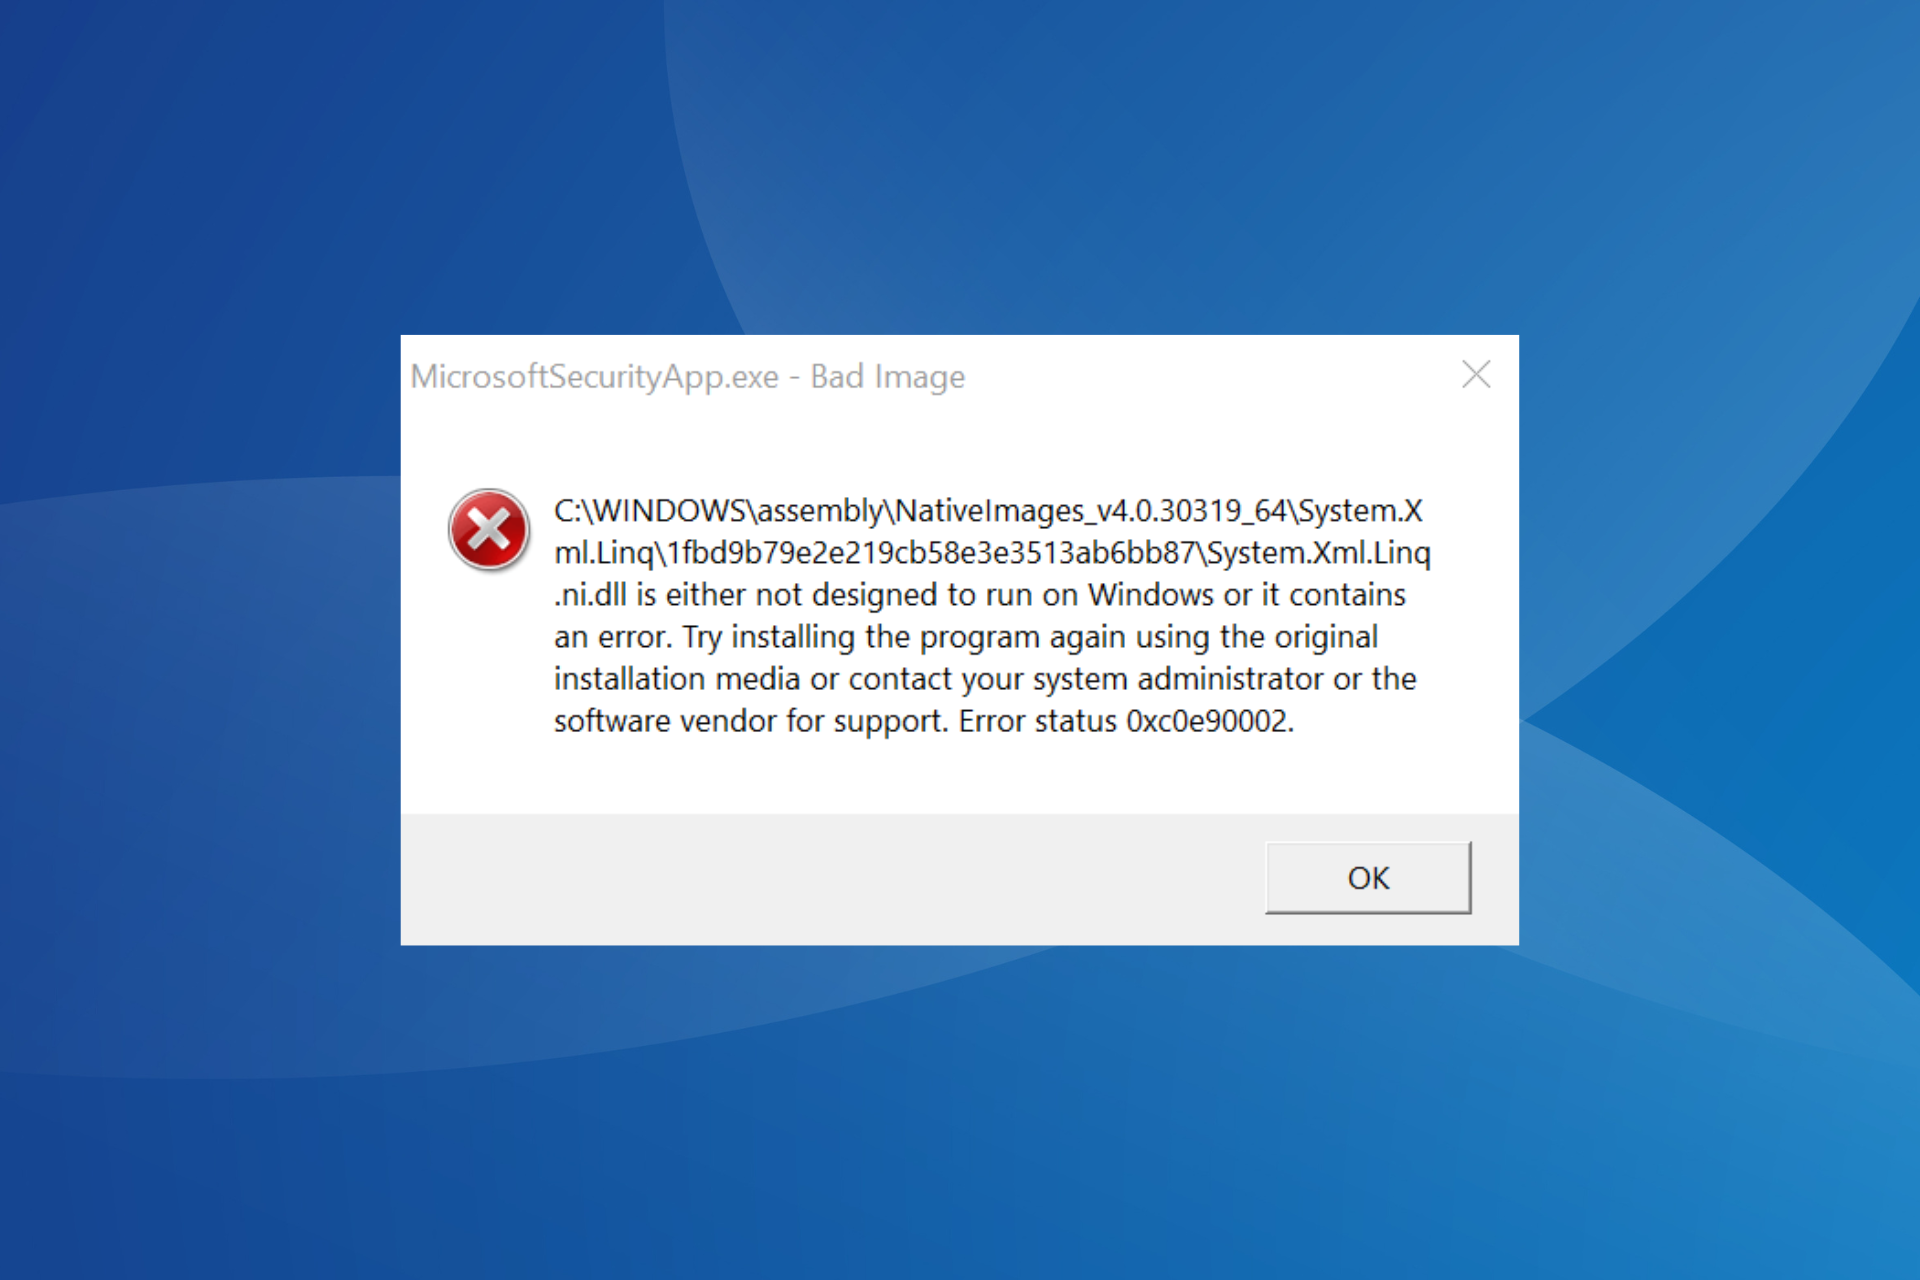 MicrosoftSecurityApp.exe Bad Image: Error 0xc0e90002 [Fix]